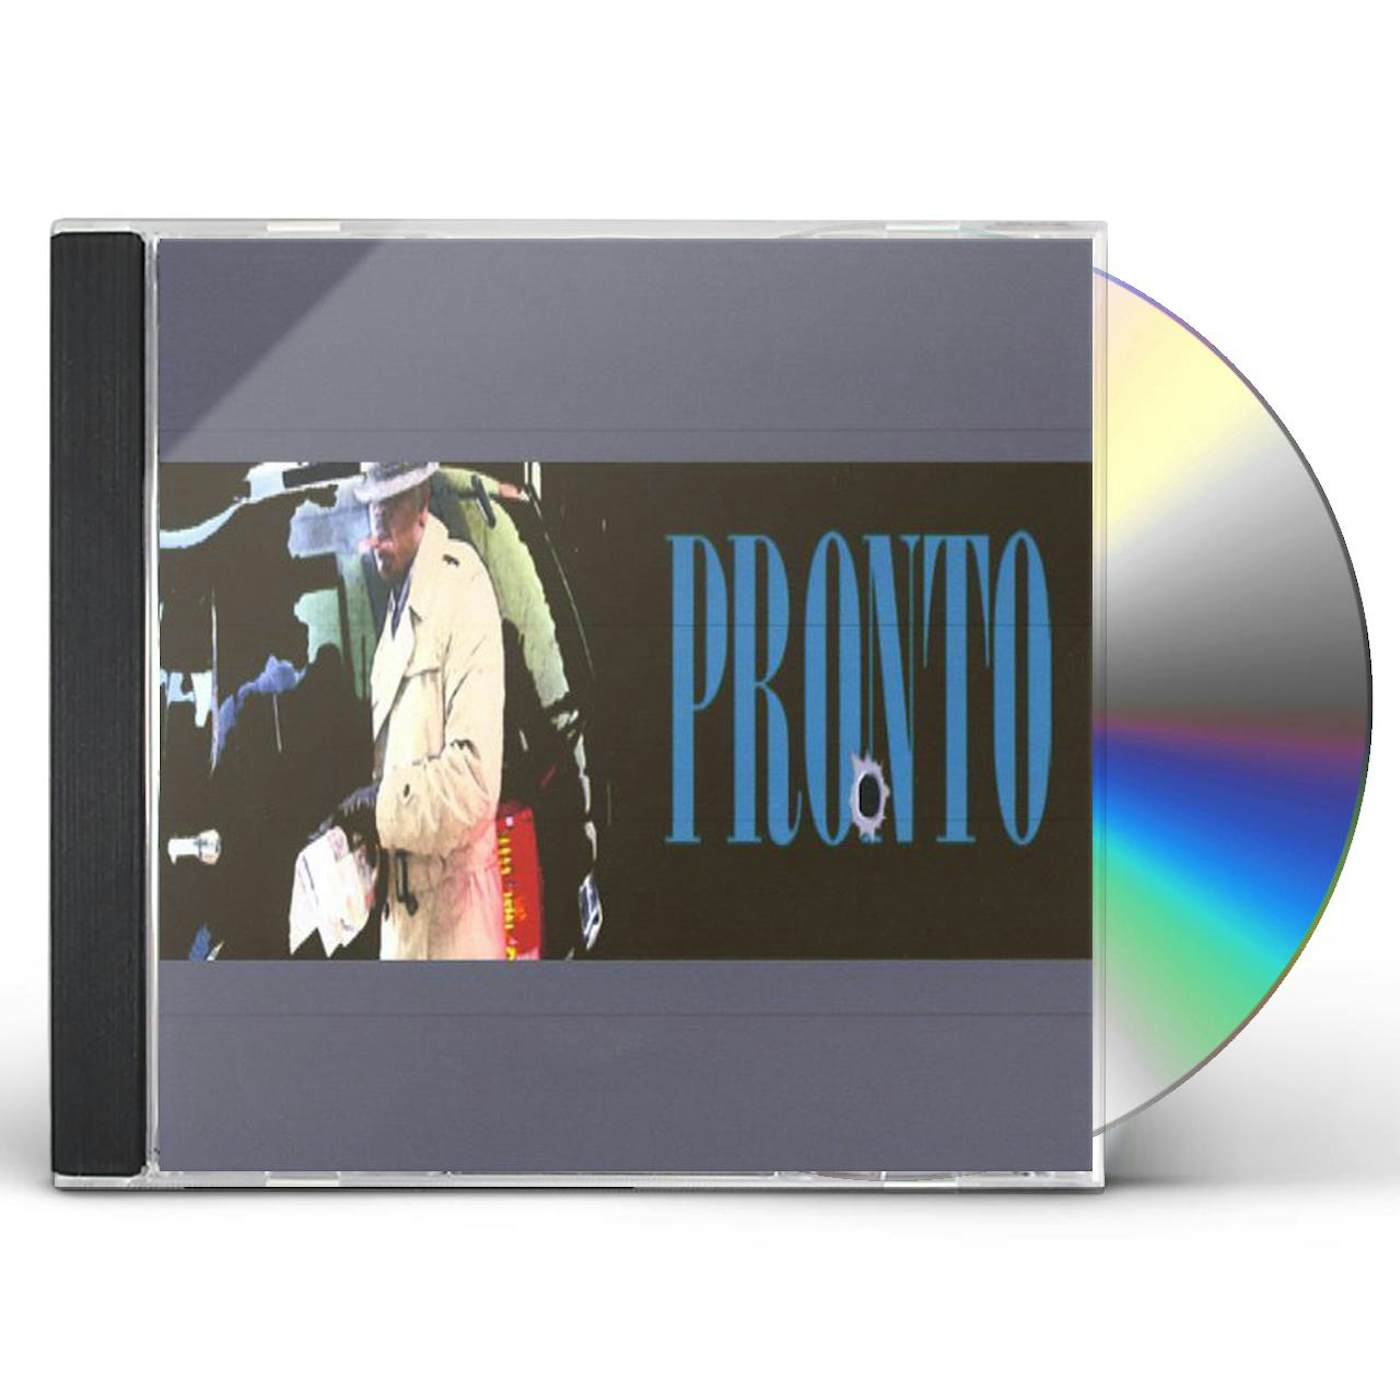 PRONTO CD